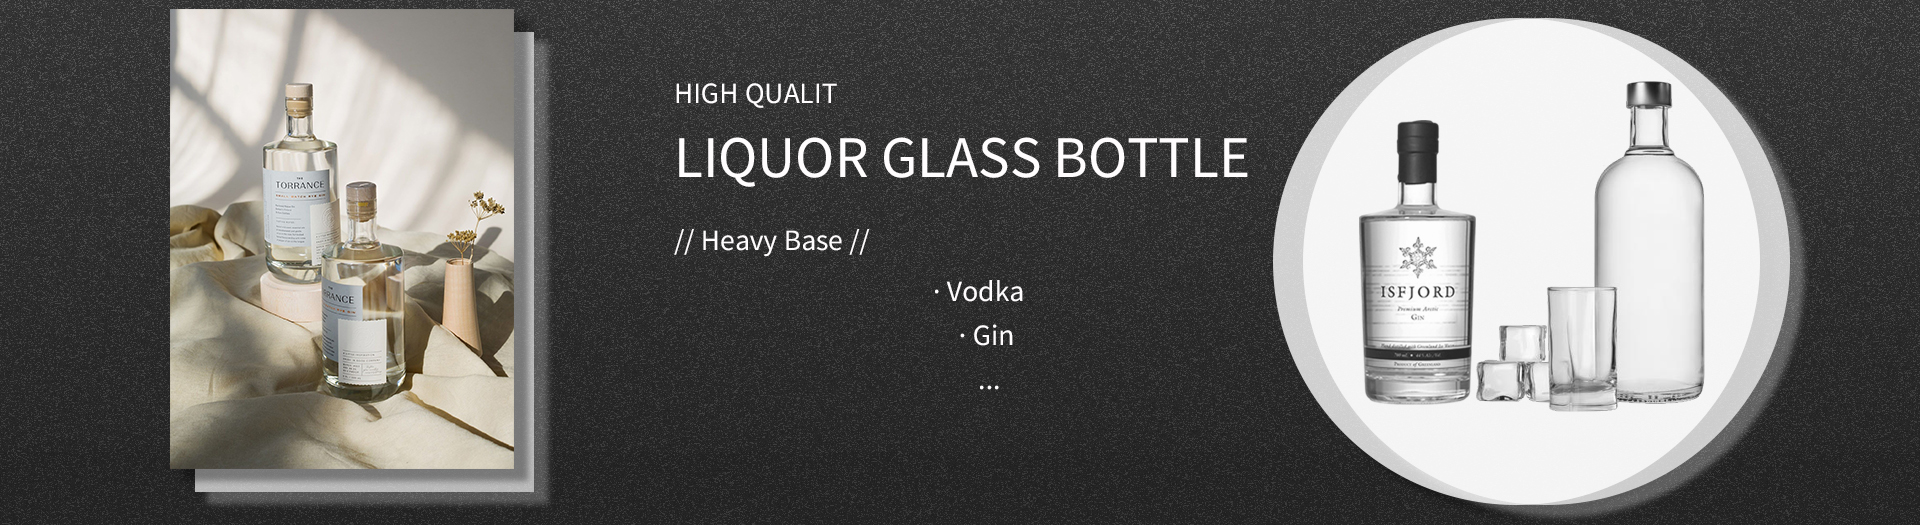 wetroyes-liquor-glass-bottle